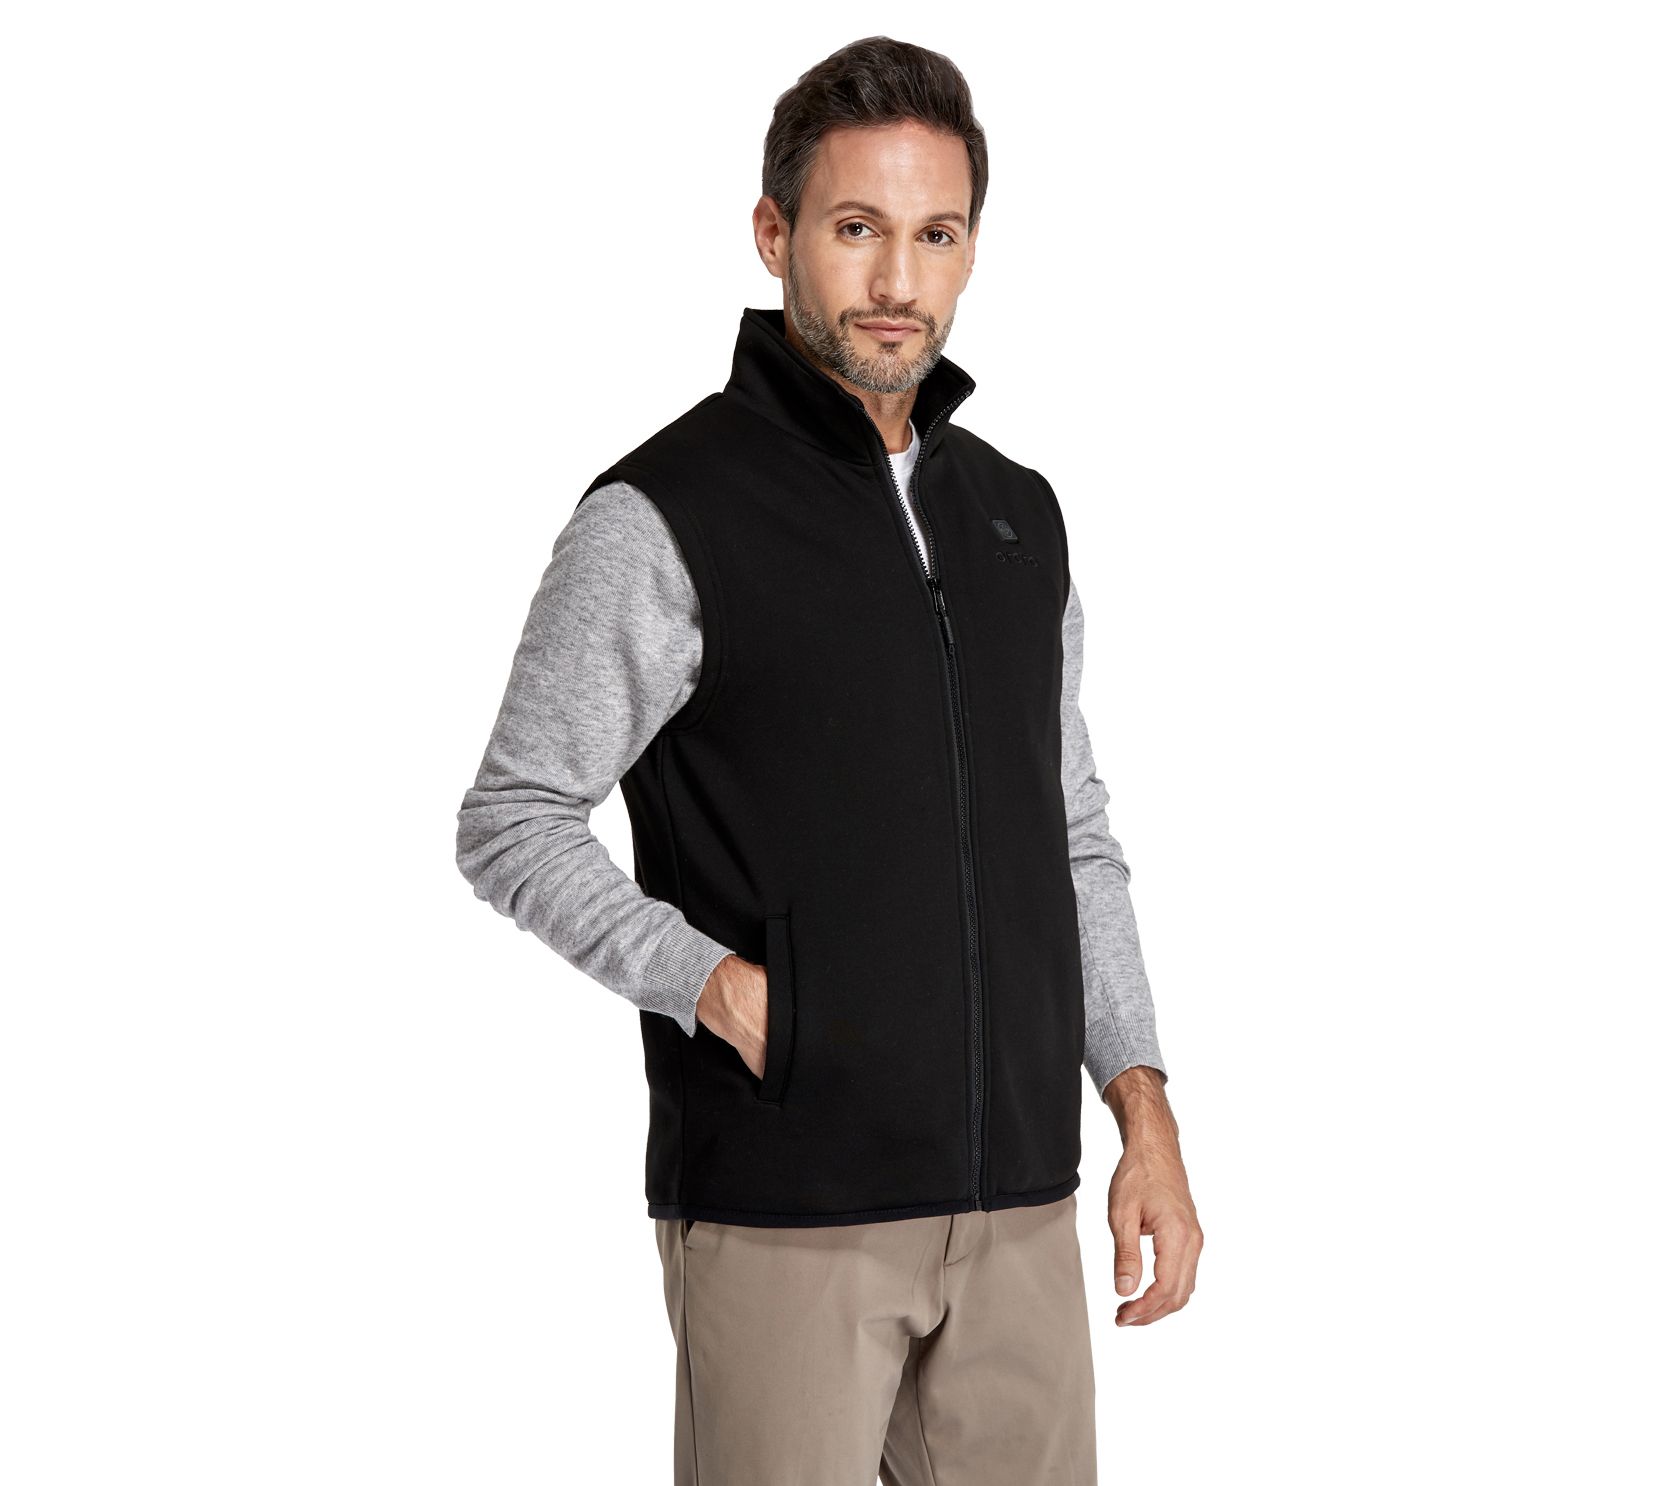 ORORO Men's Heated Fleece Vest with Battery Pack - QVC.com